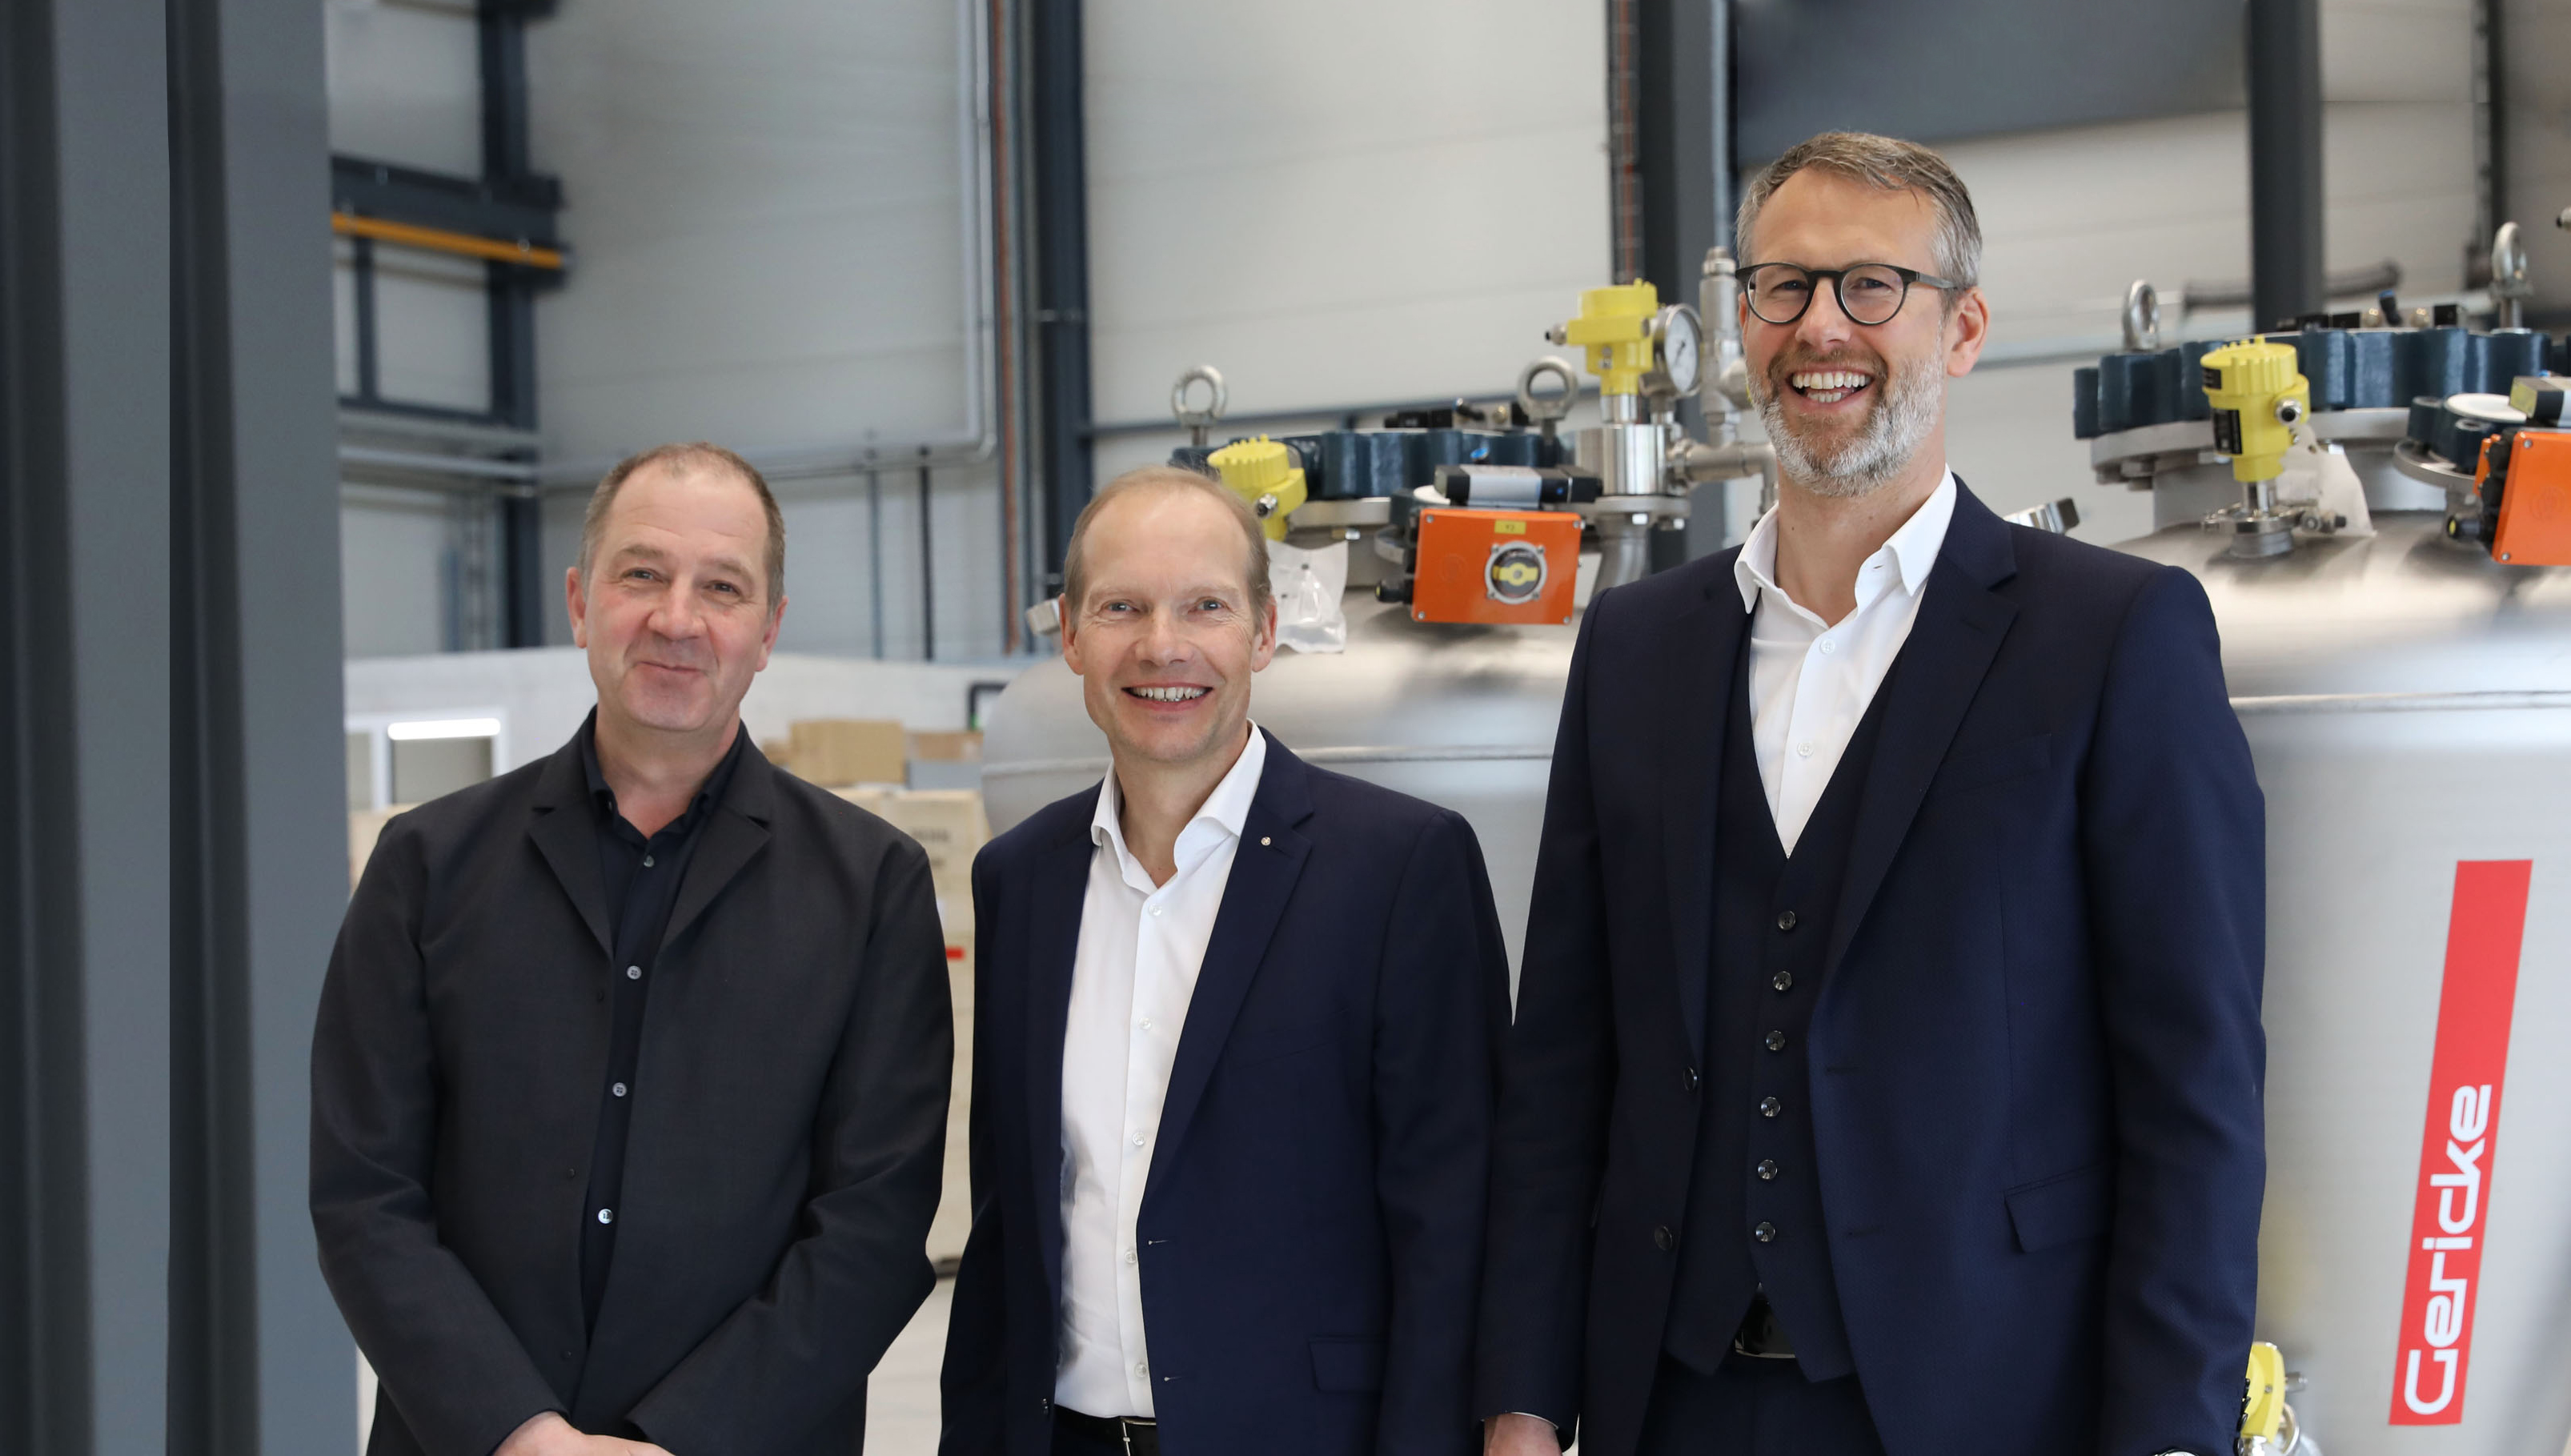 De gauche à droite : Dr. Ralf Weinekötter (Directeur de Gericke AG) | Markus H. Gericke (CEO du Groupe Gericke) | Thomas Schlumpf (CFO du Groupe Gericke) 